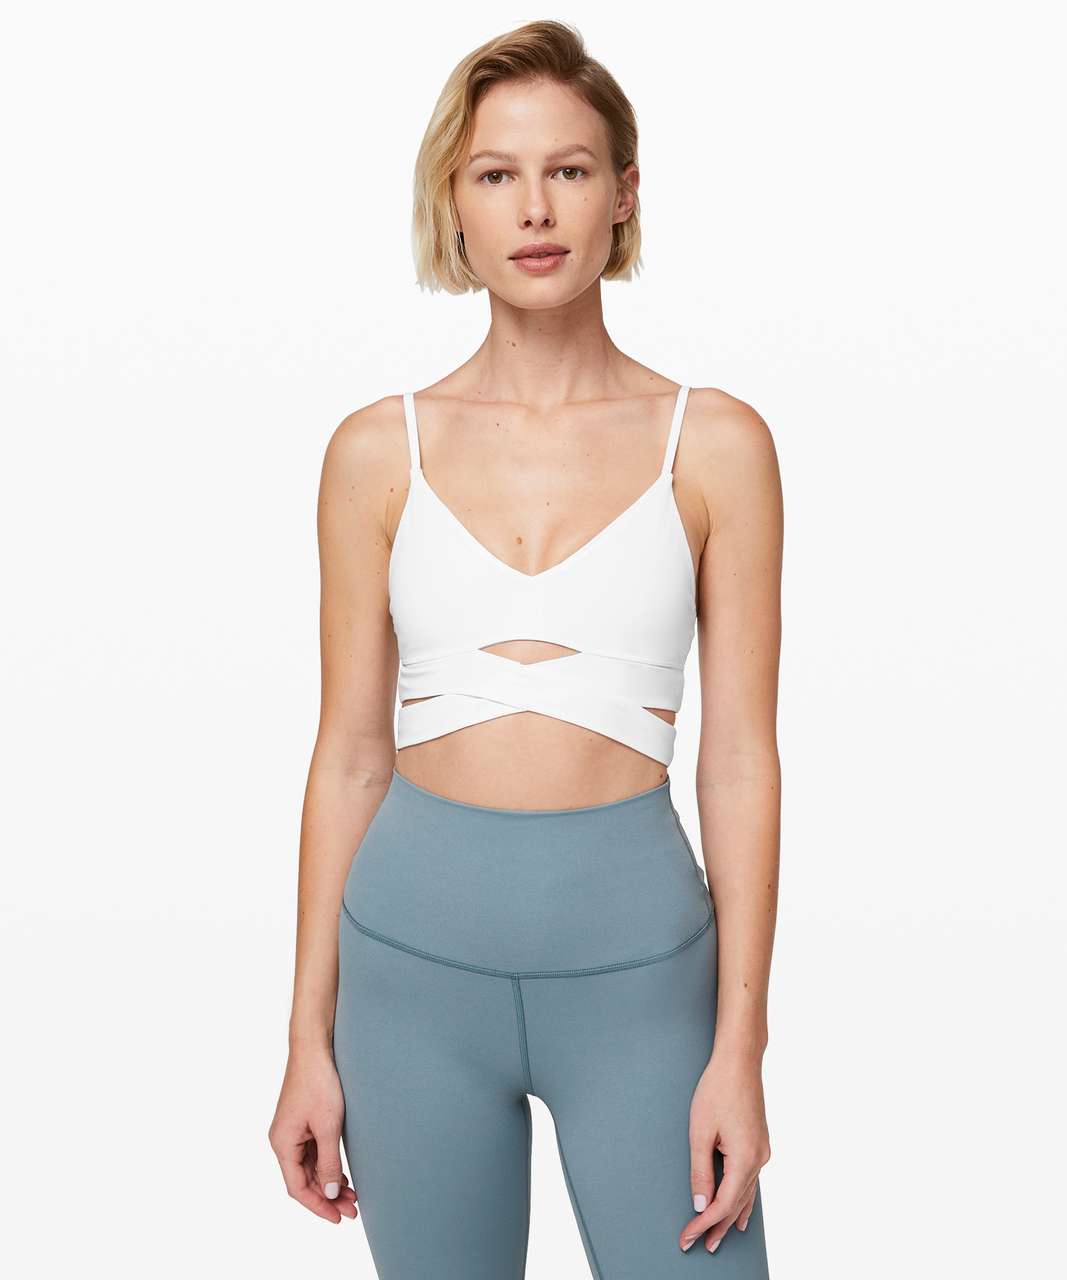 Lululemon White Sports Bra Size 26 A - $40 (31% Off Retail) - From Eliza